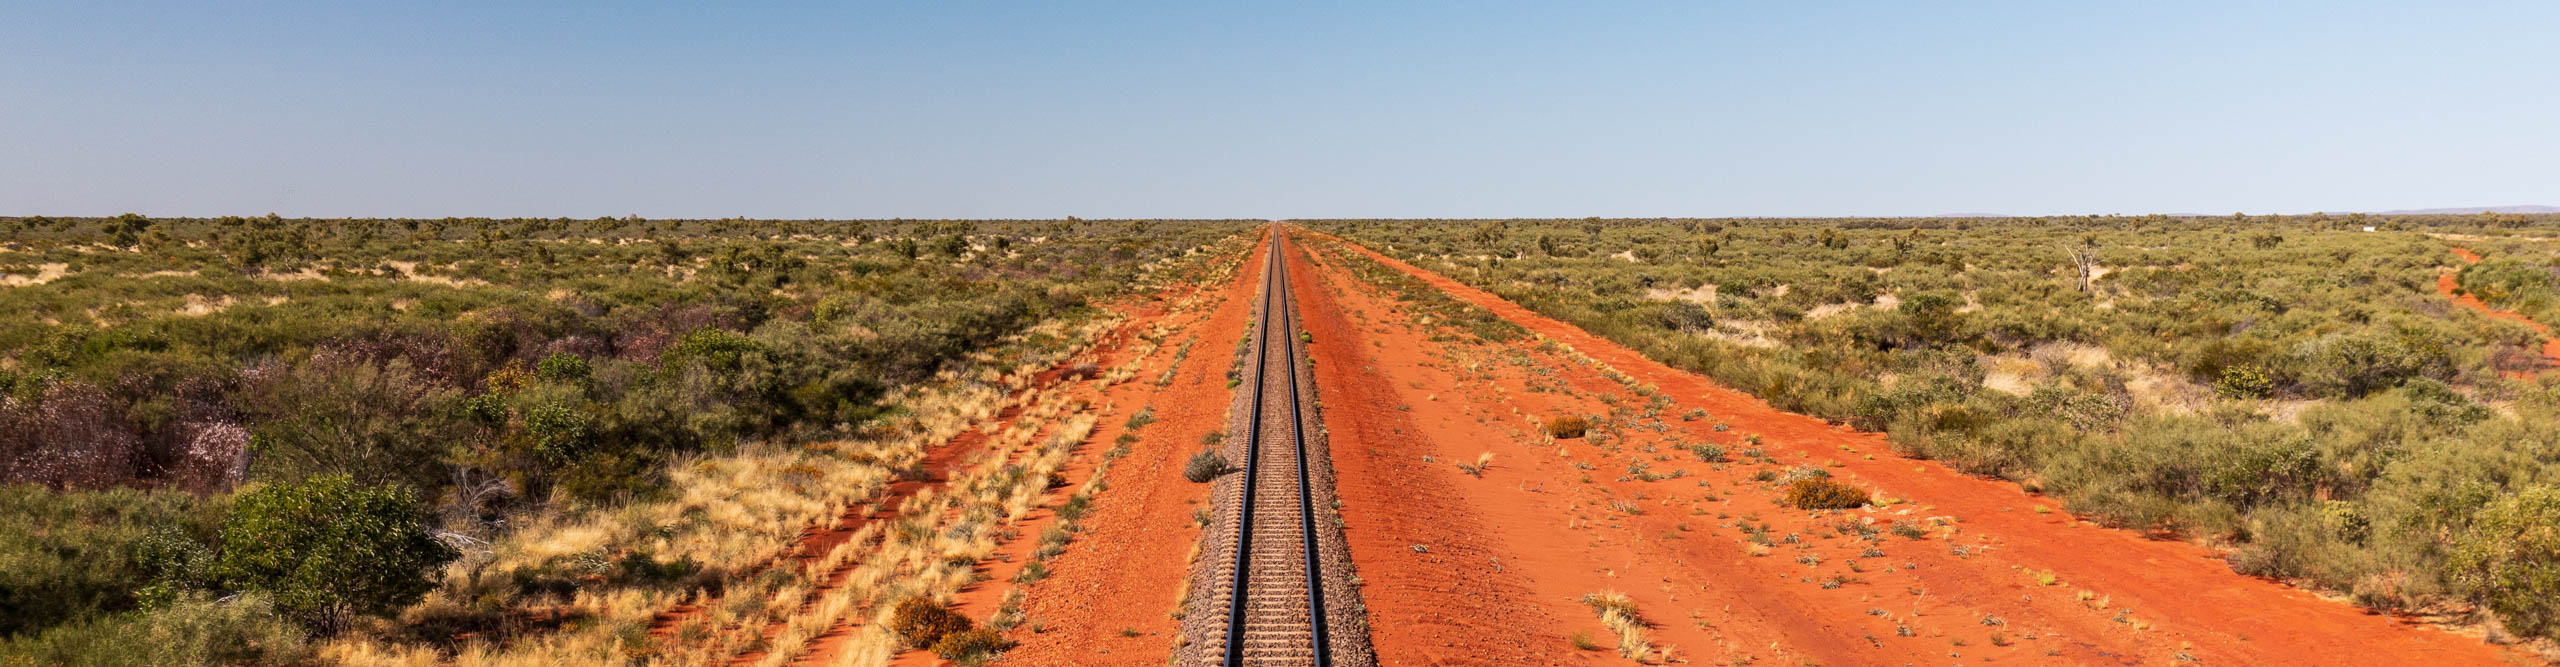 Train tracks in the red desert of the Australian Outback